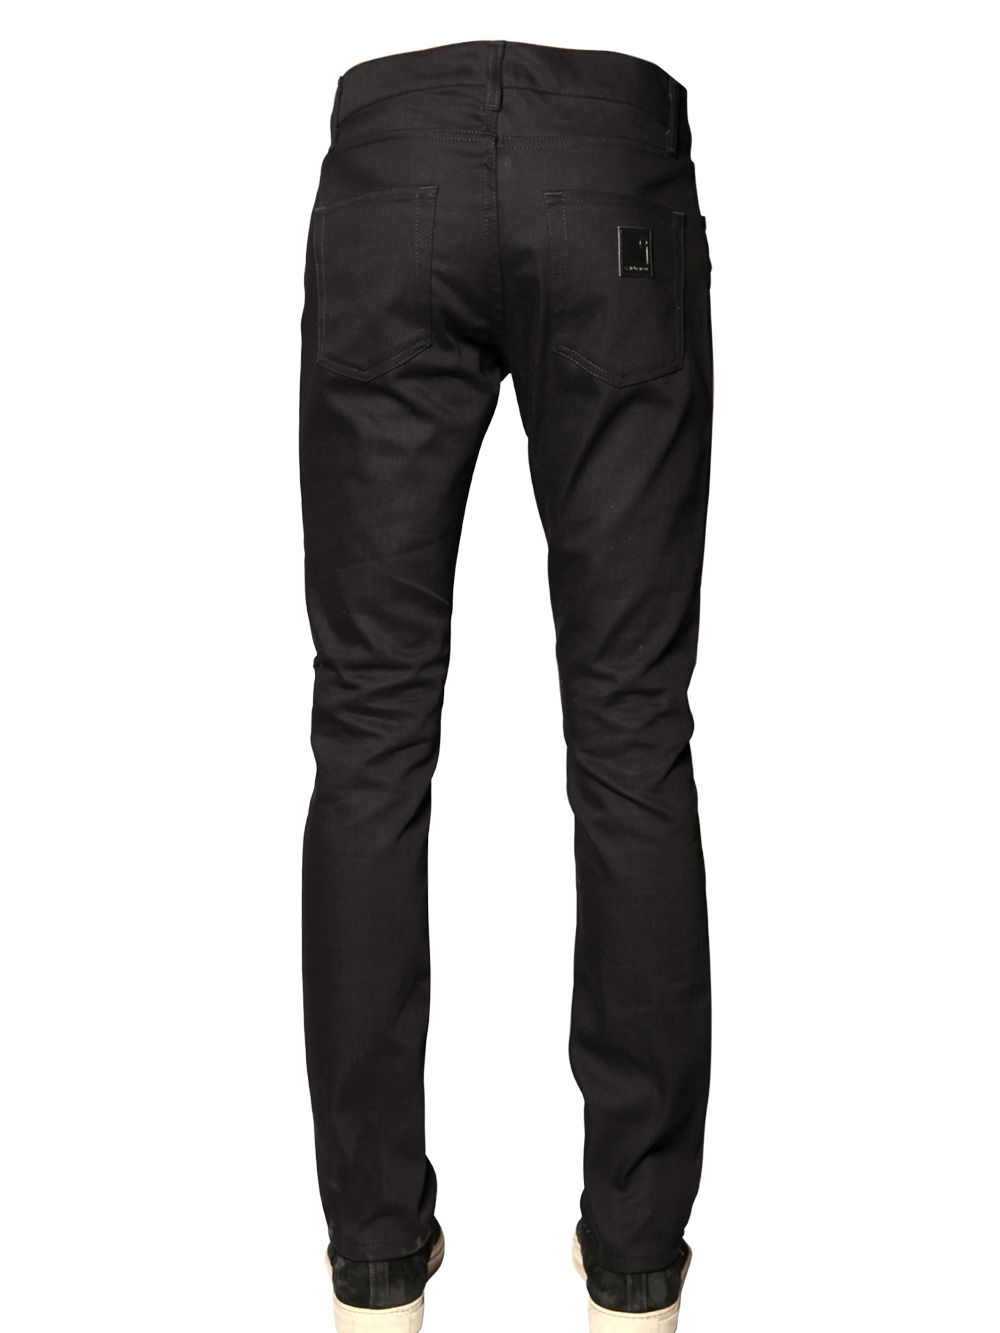 Lyst - Carhartt 17cm Slim Fit Stretch Denim Jeans in Black for Men